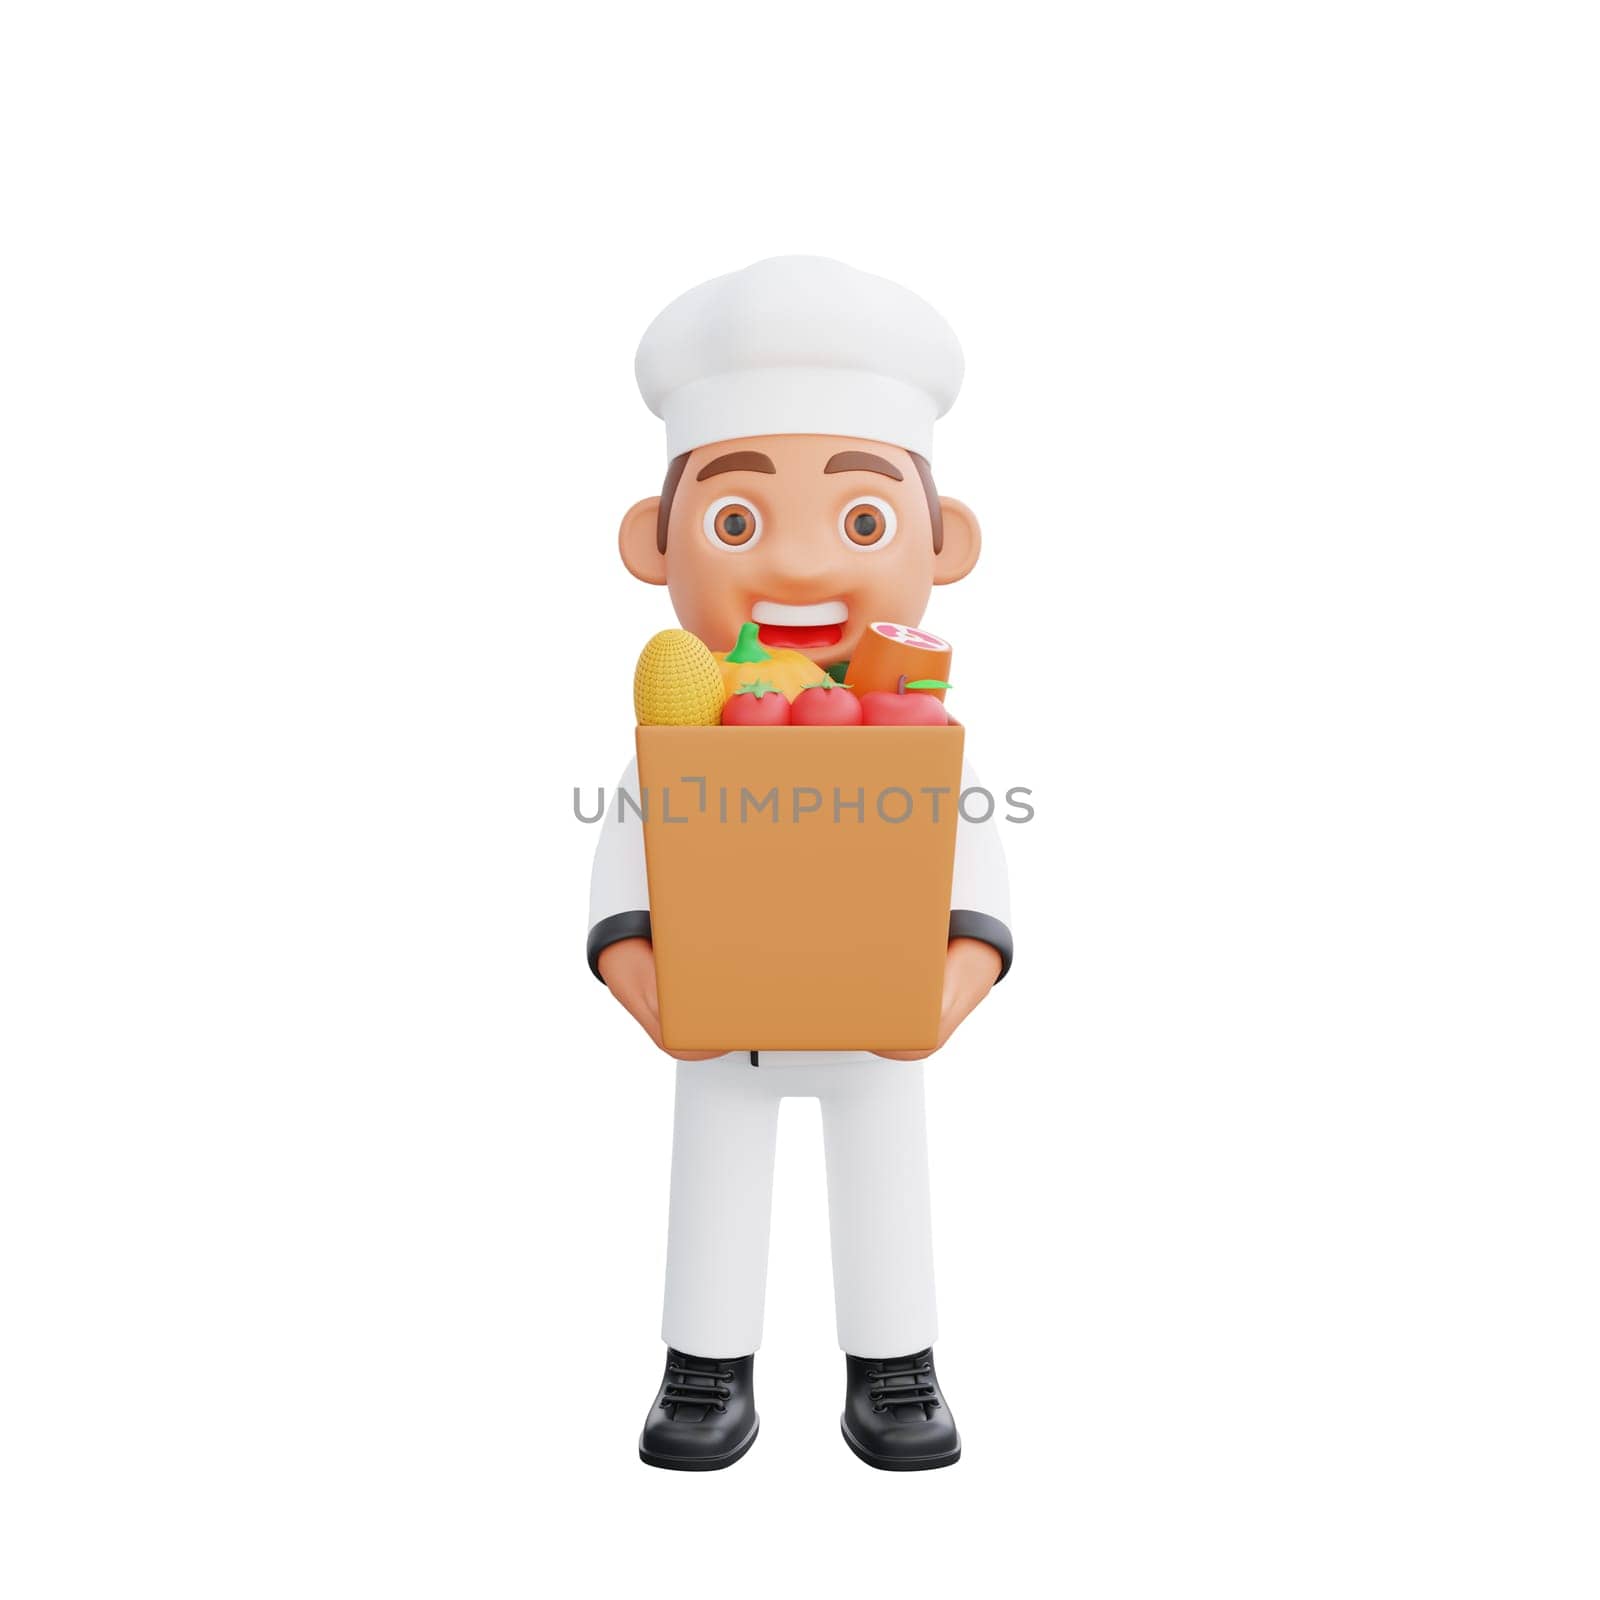 3D illustration of a chef cartoon character design by Rahmat_Djayusman